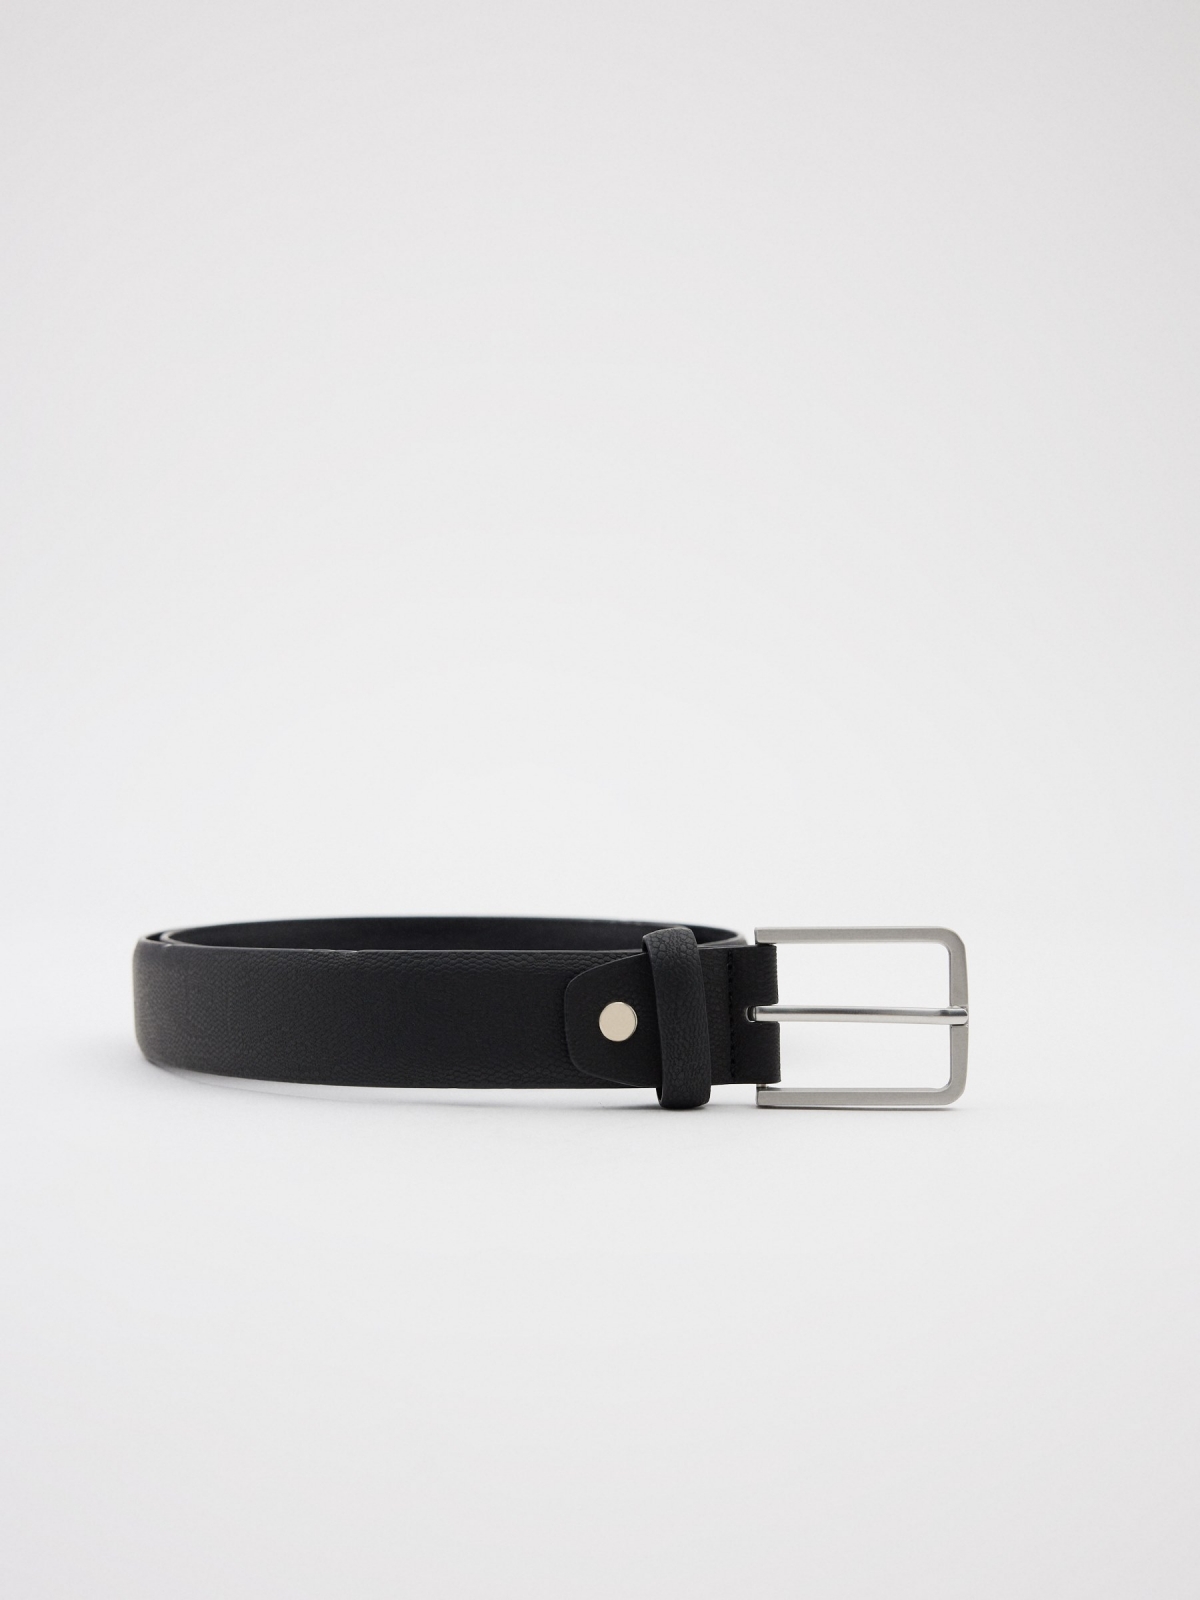 Black leatherette belt rolled view